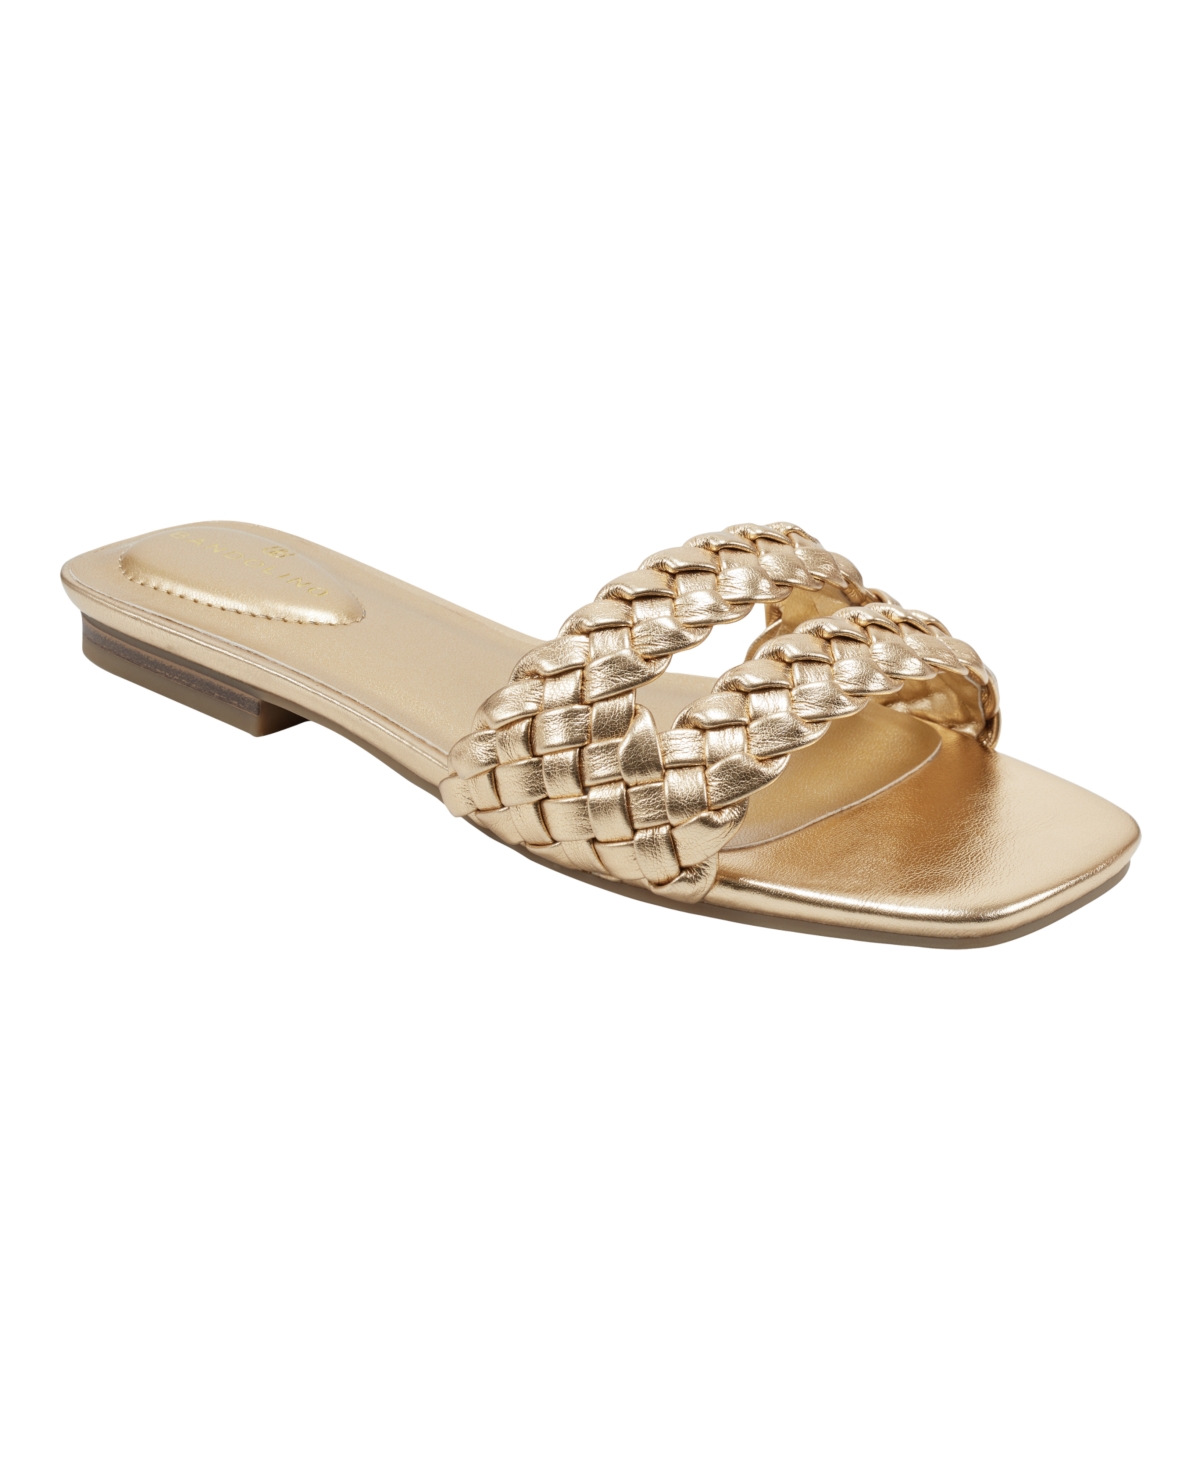 Bandolino Women's Sessily Open Toe Flat Slip-on Sandals Women's Shoes ...